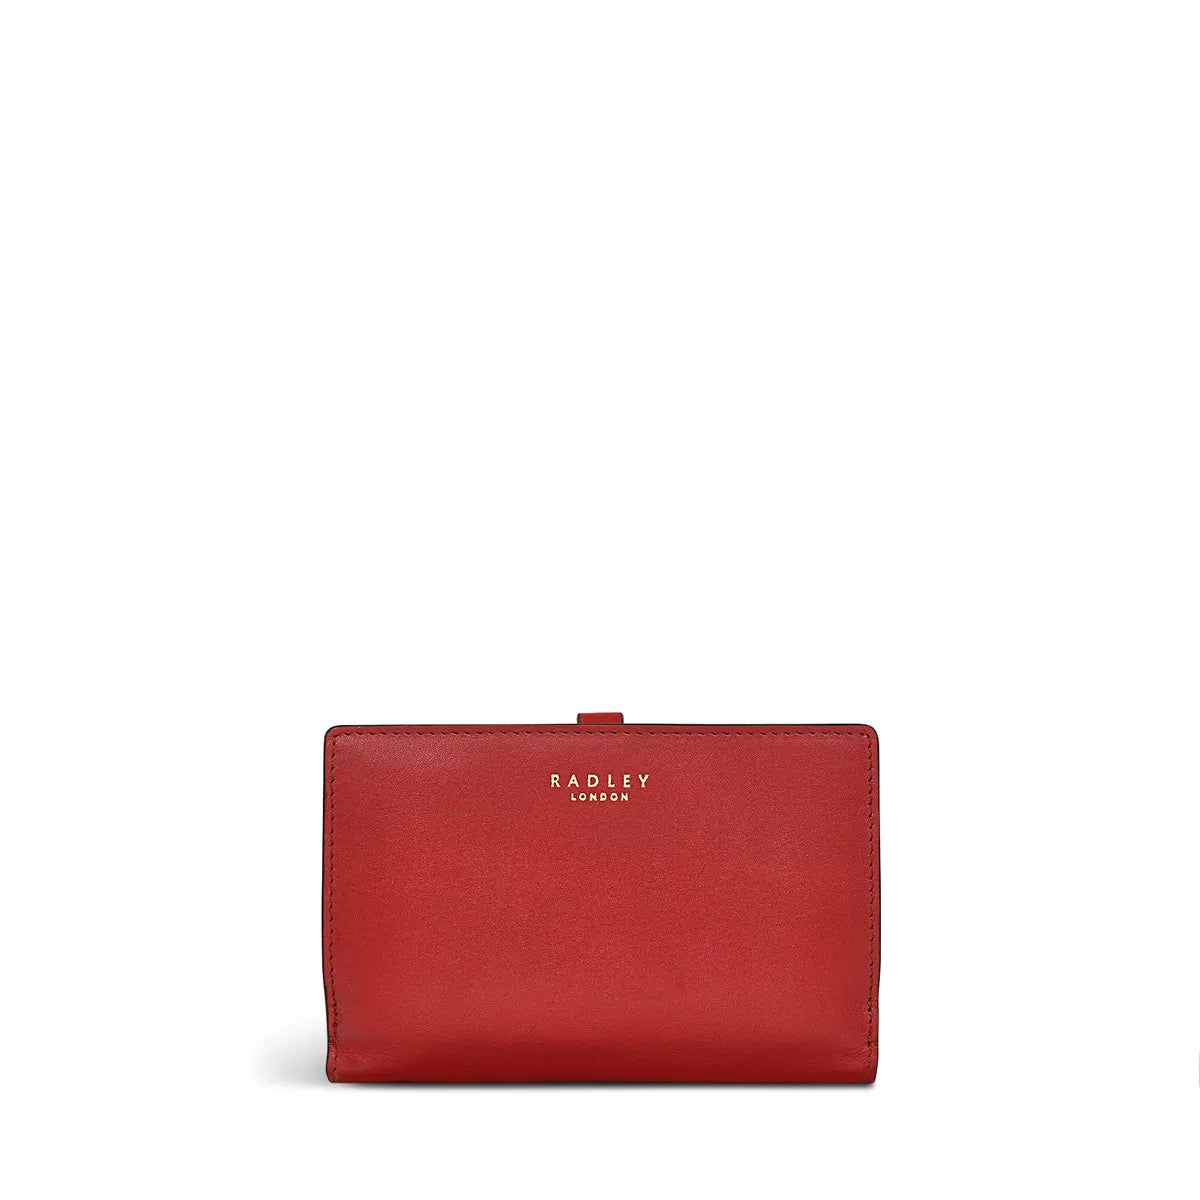 Handbags, Bags & Purses - Radley, Sale | John Lewis & Partners